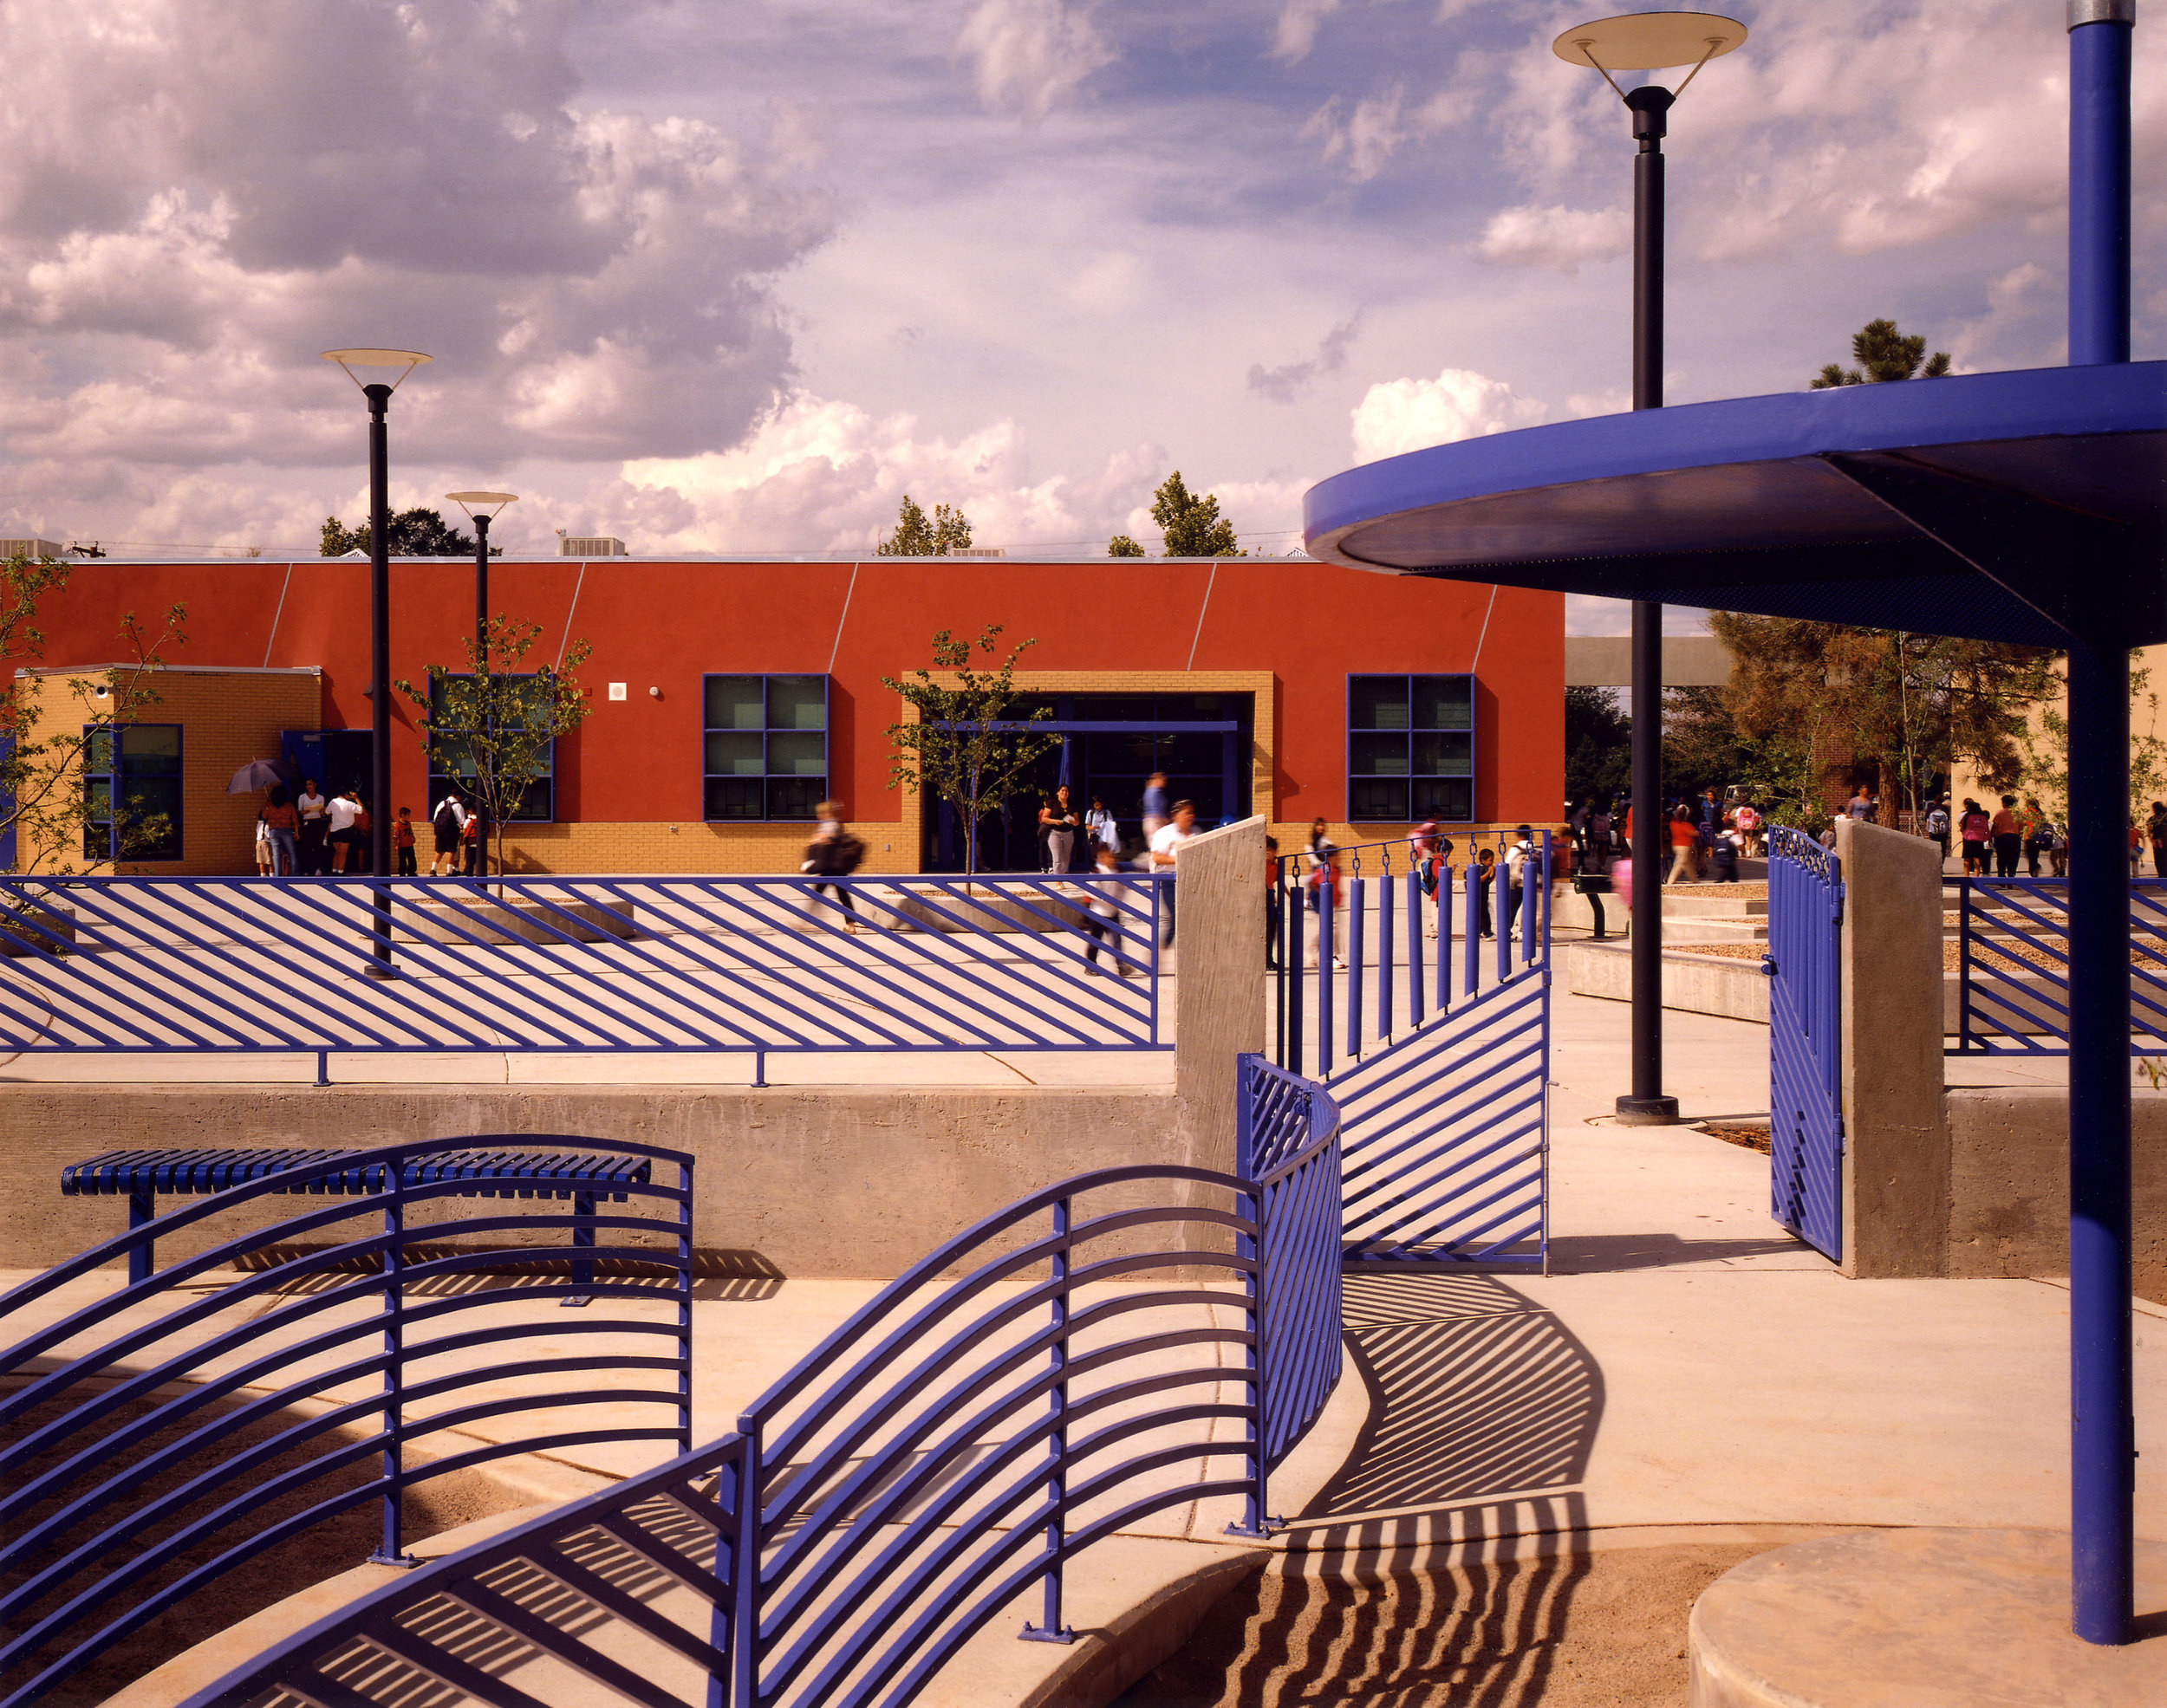 La Mesa Elementary School